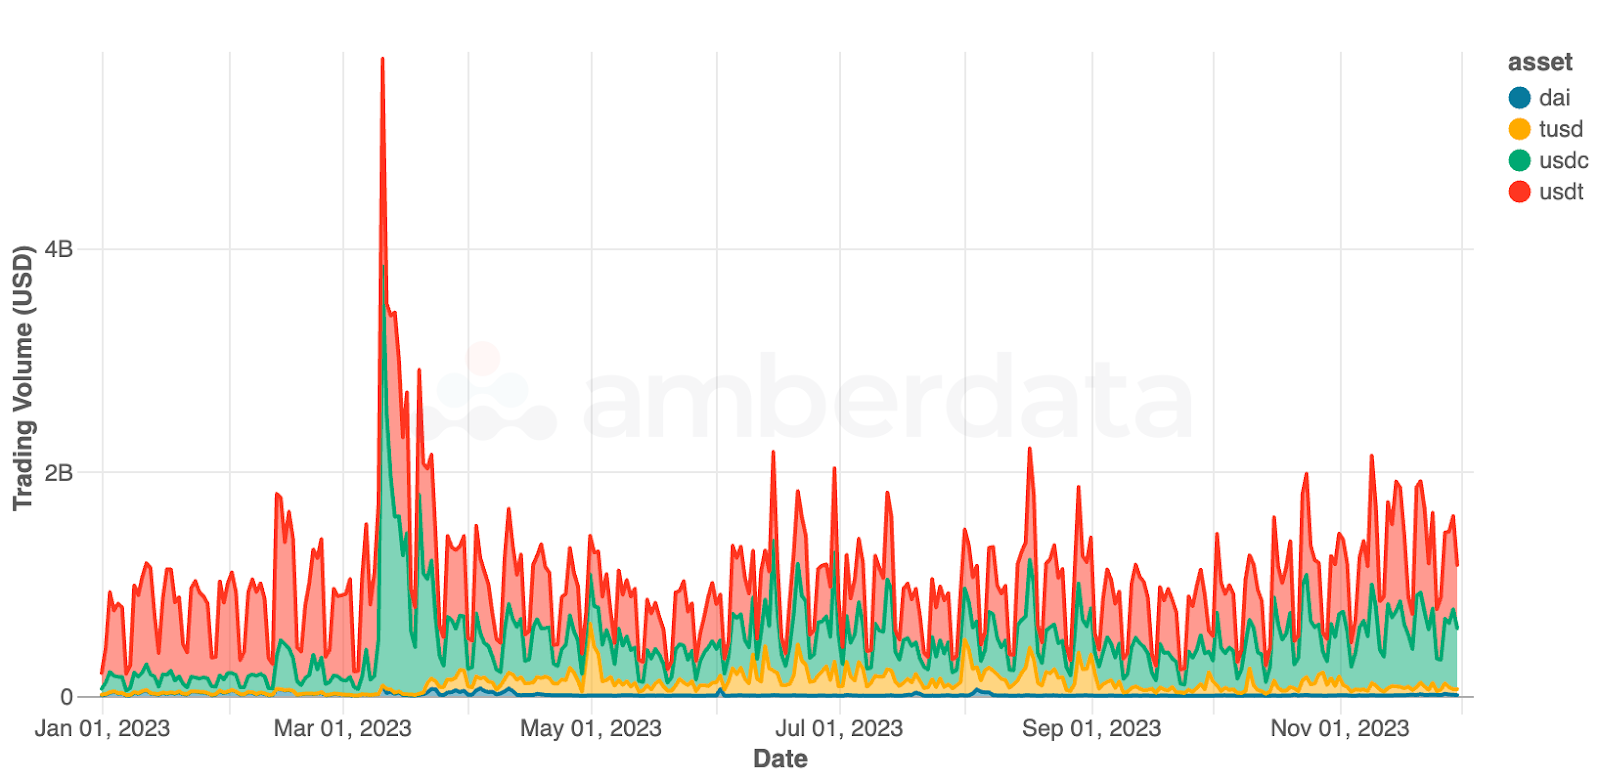 Amberdata API Spot trading volume (USD) for USDC, USDT, DAI, and TUSD since Jan 2023